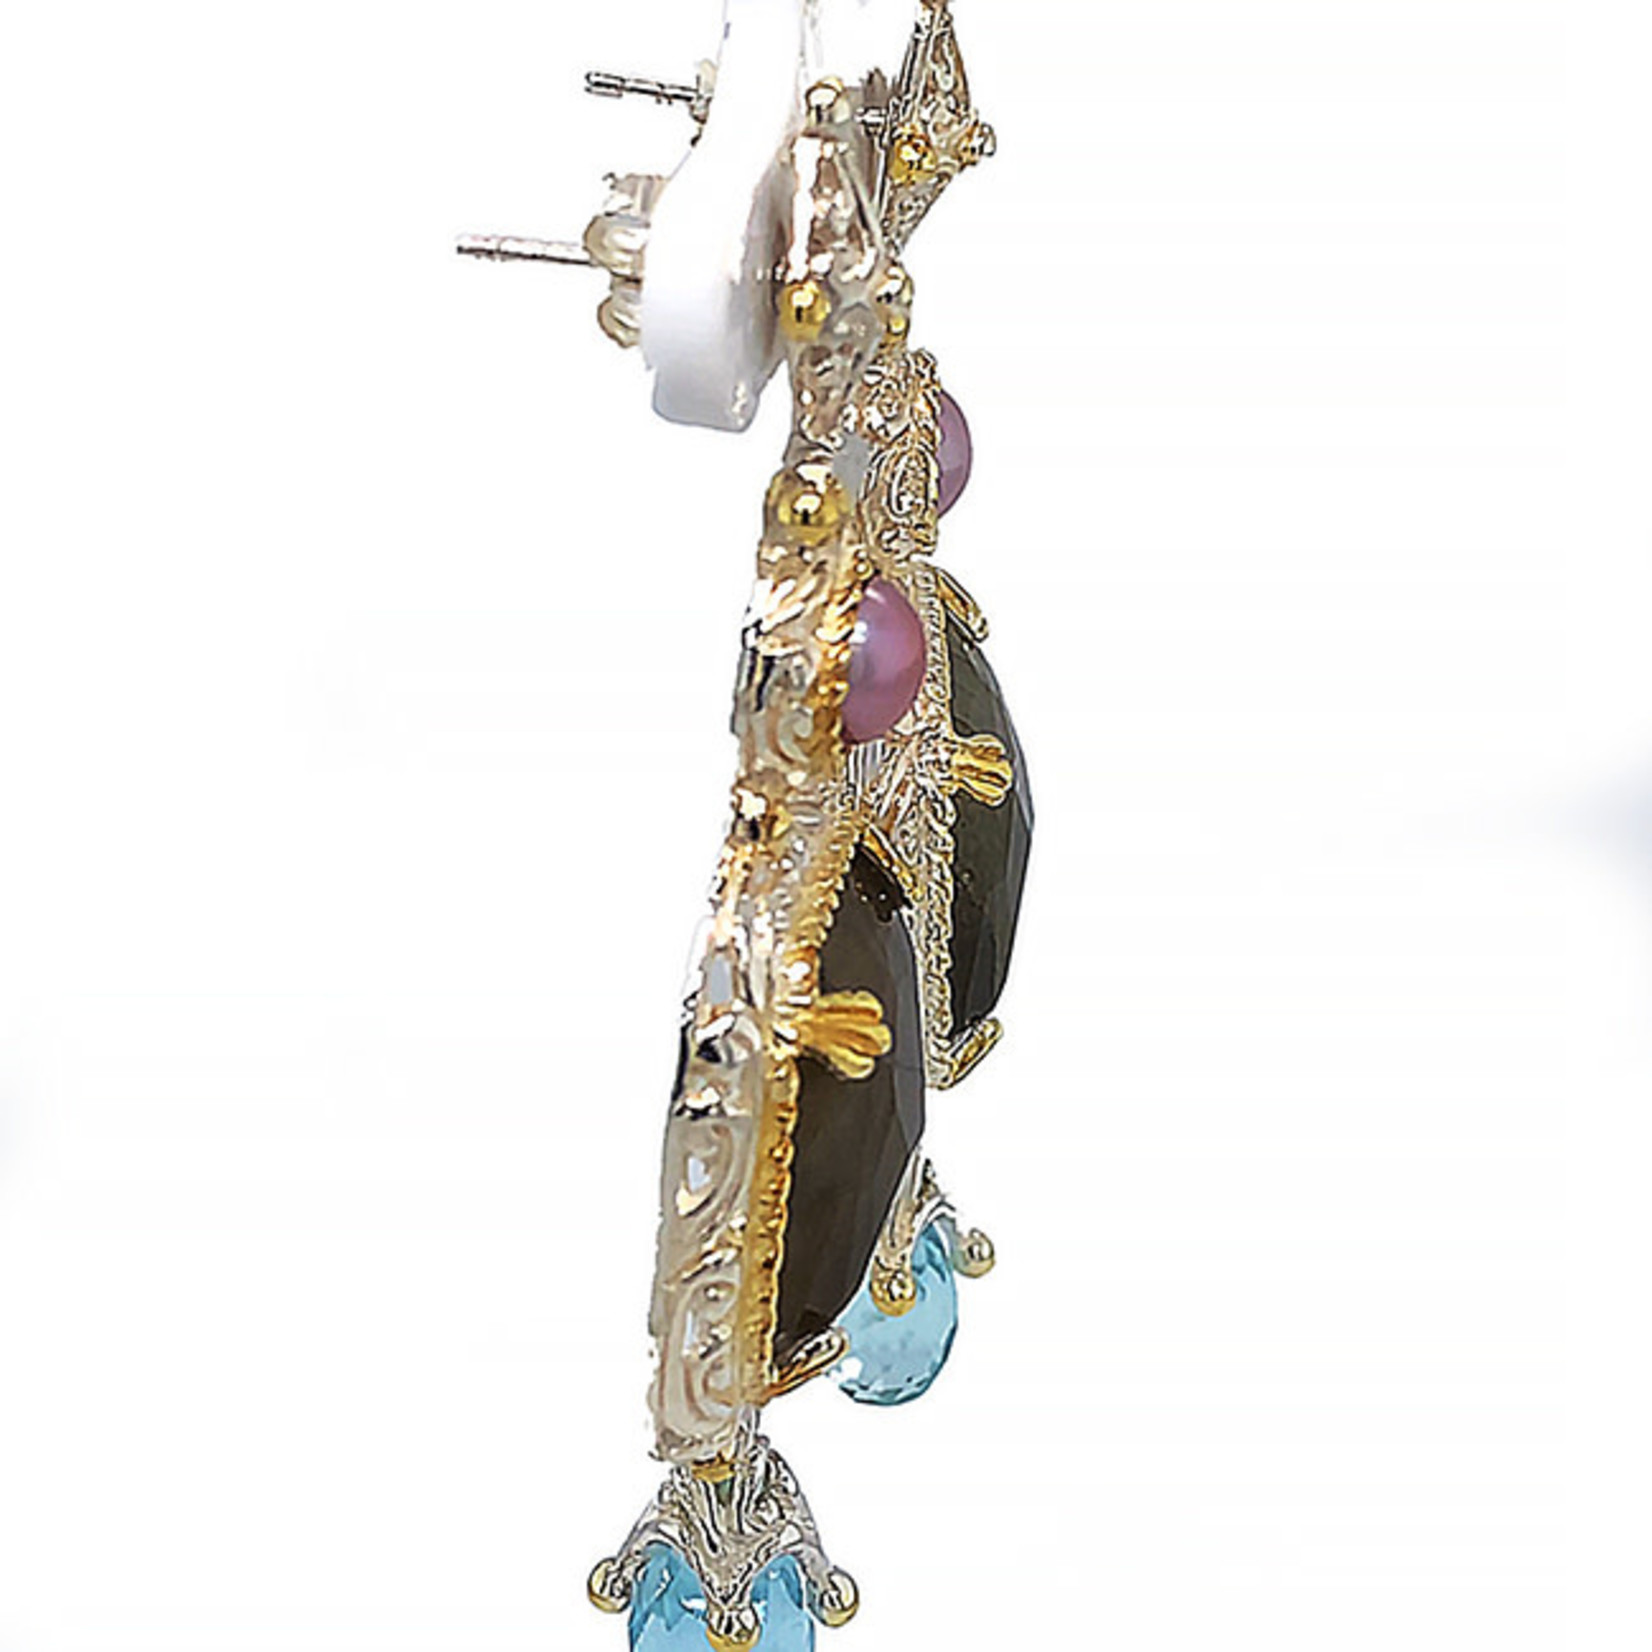 Jewelry By Danuta - Silver Drawer Pearl & Labradorite & Aqua Silver Earrings